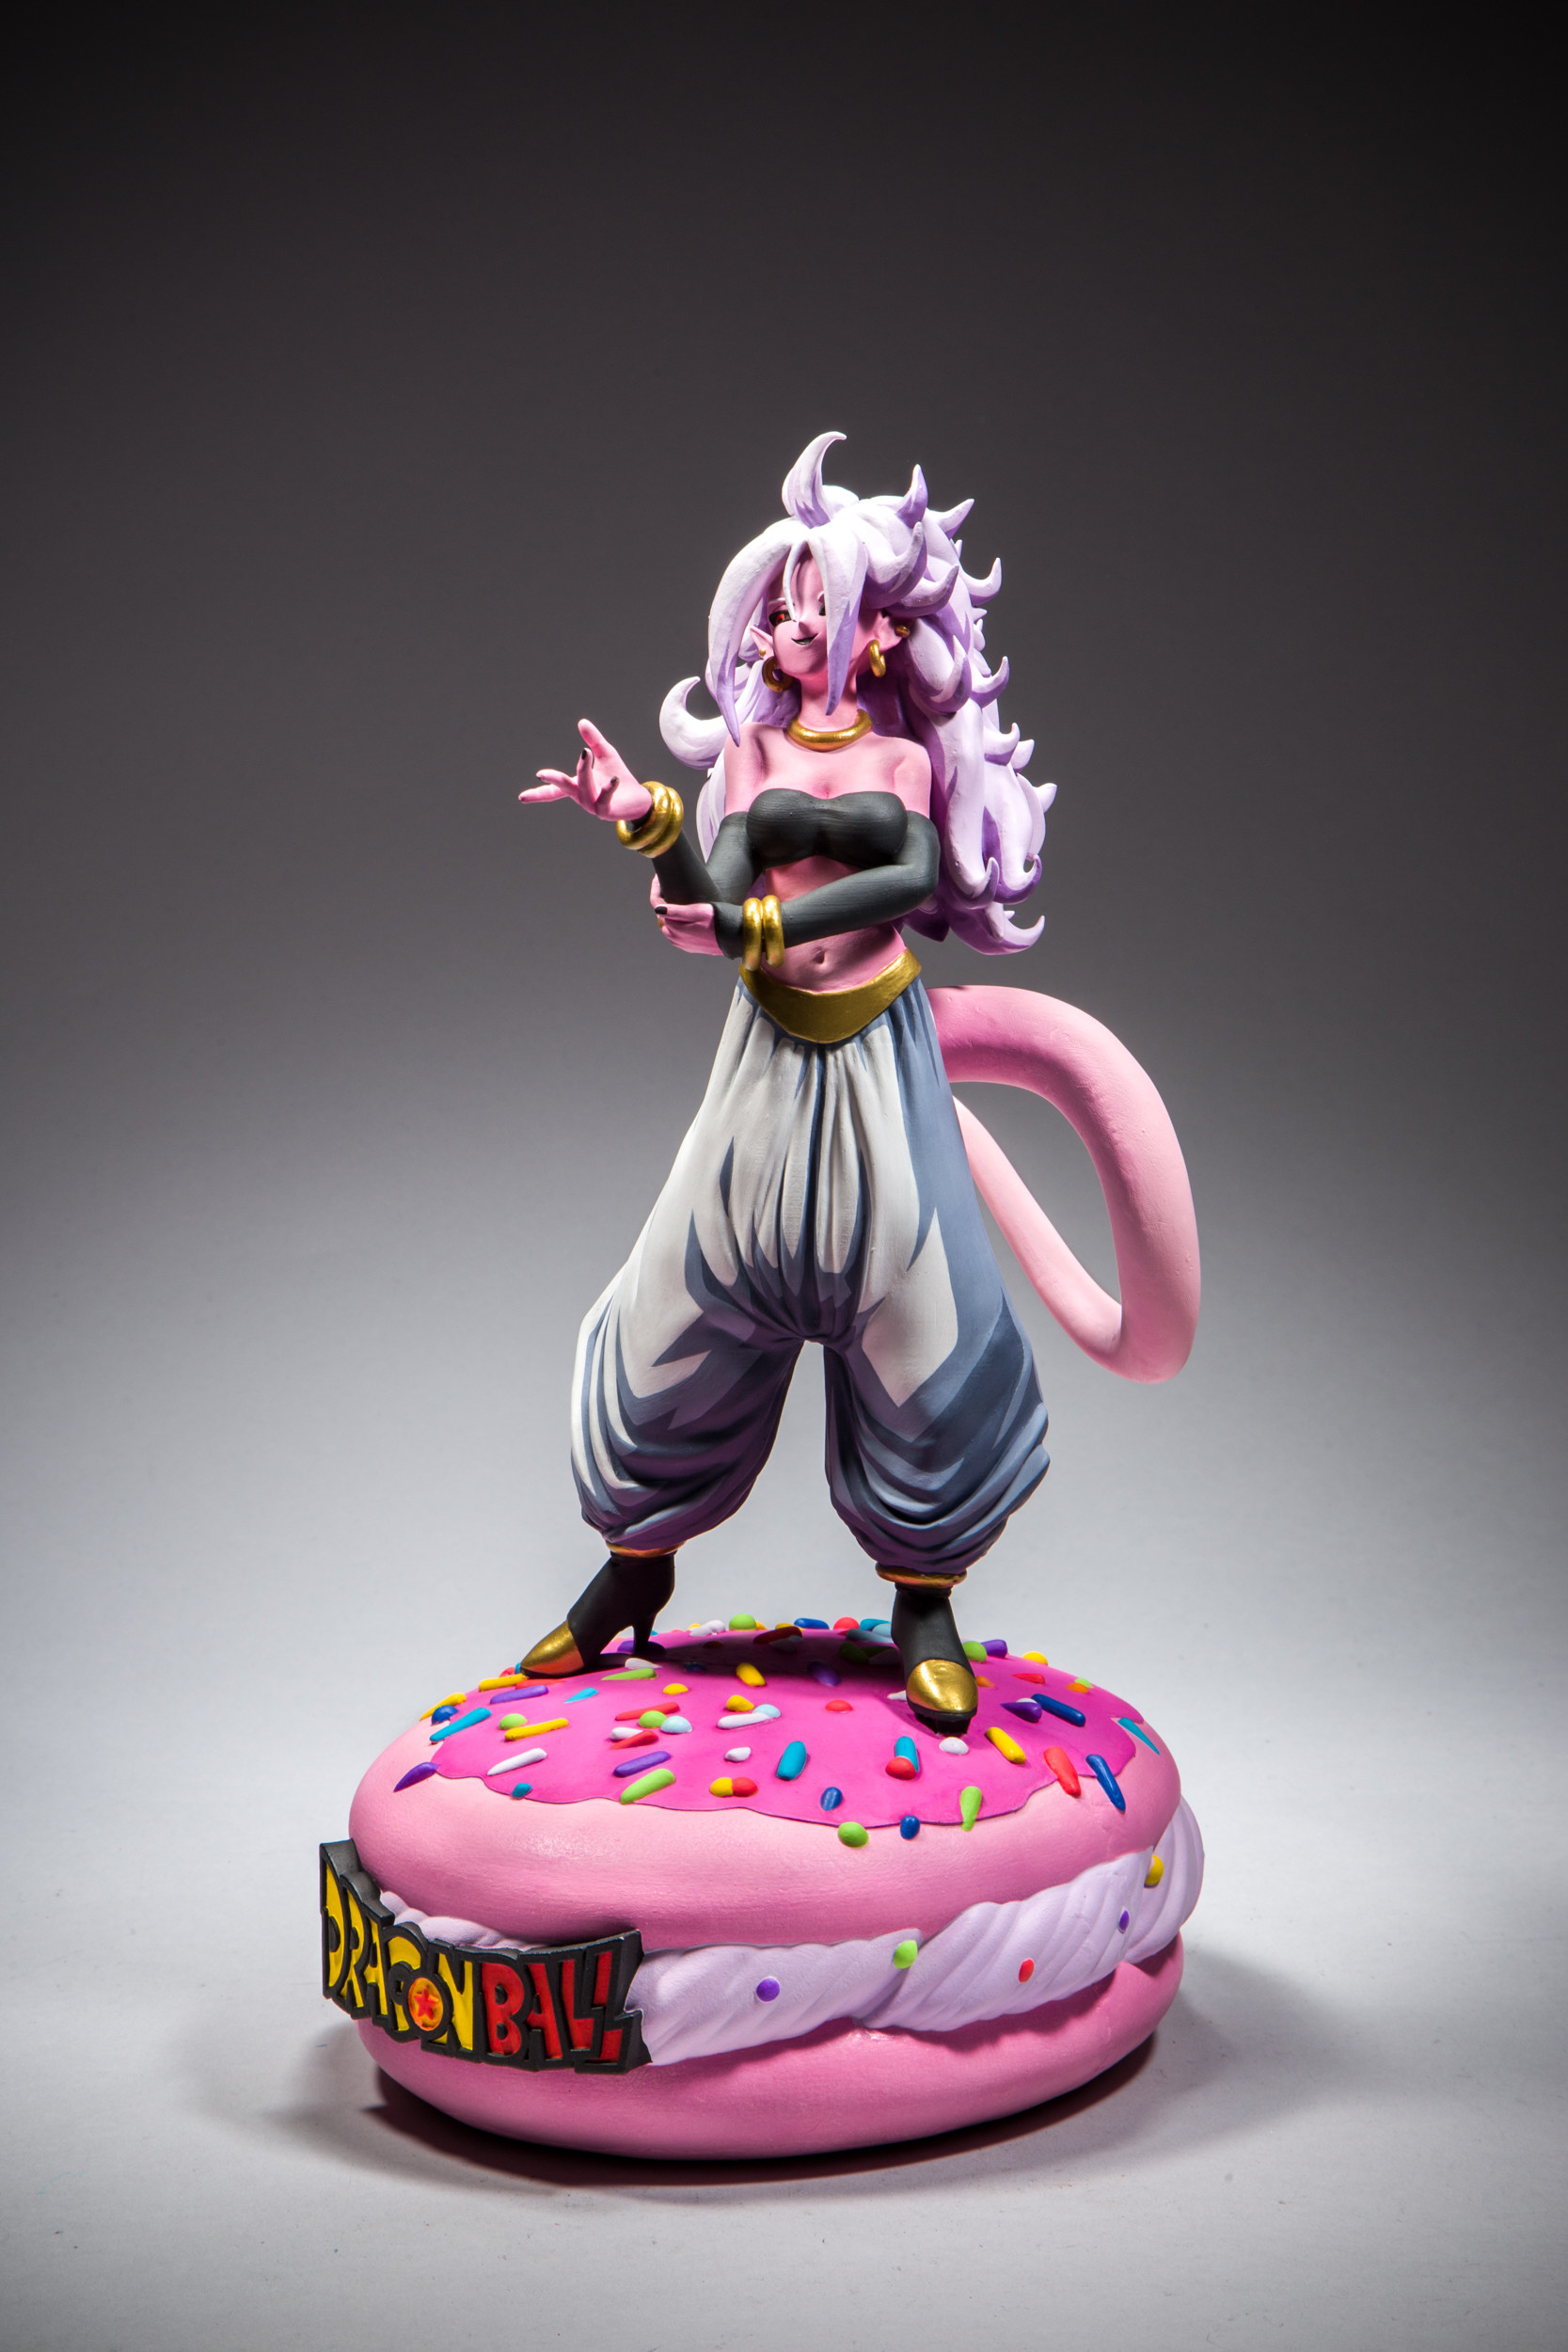 Anime Majin Buu Figure Statue Dragon Ball Z Figure Android 21